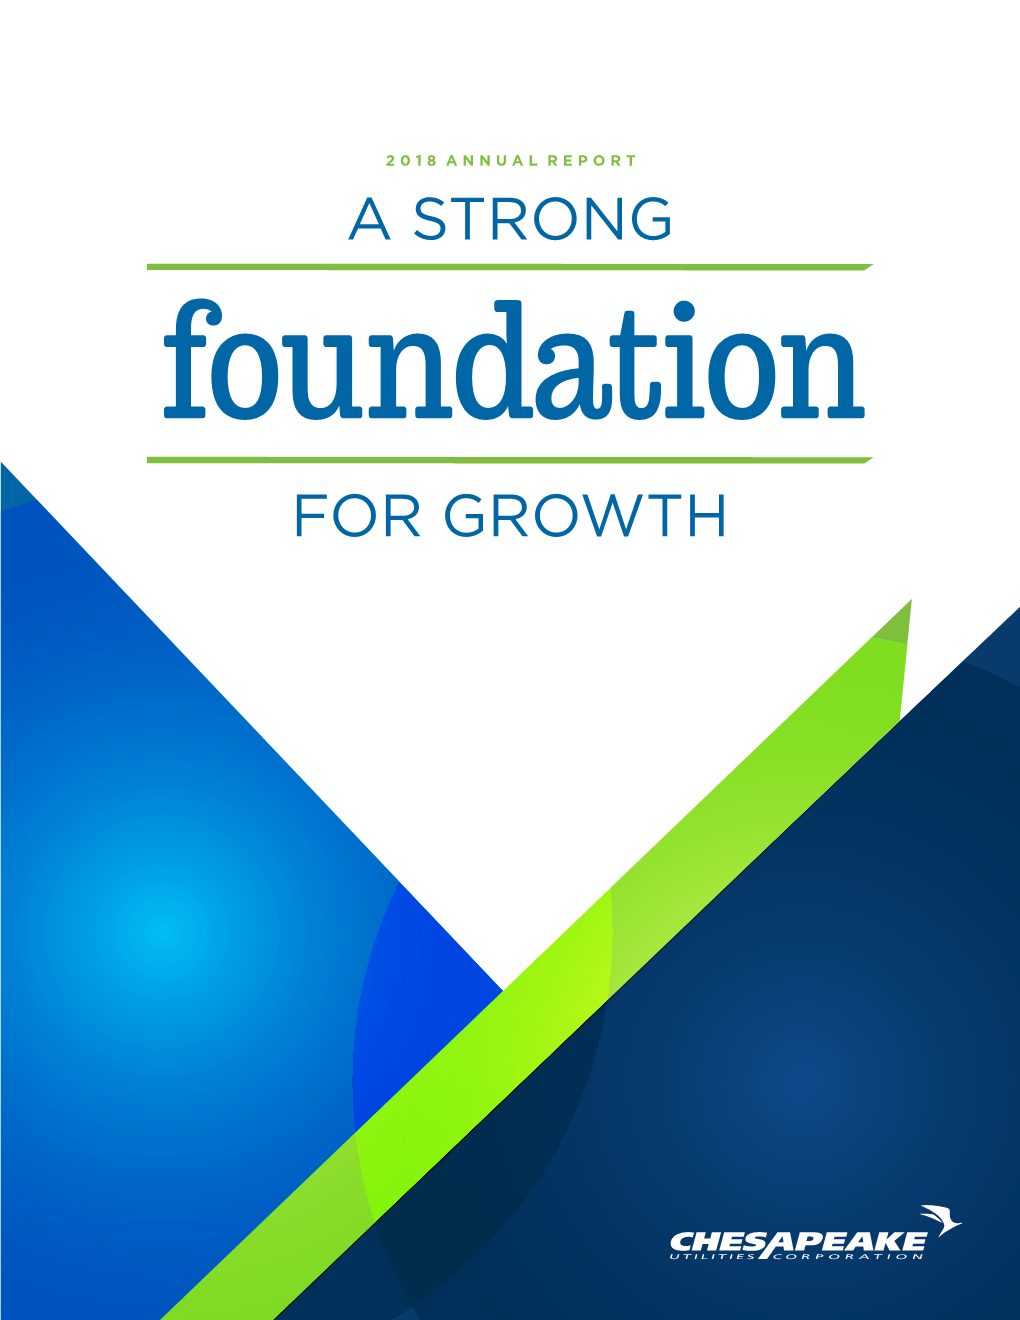 2018 ANNUAL REPORT a STRONG Foundation for GROWTH Foundation Noun Foun•Da•Tion